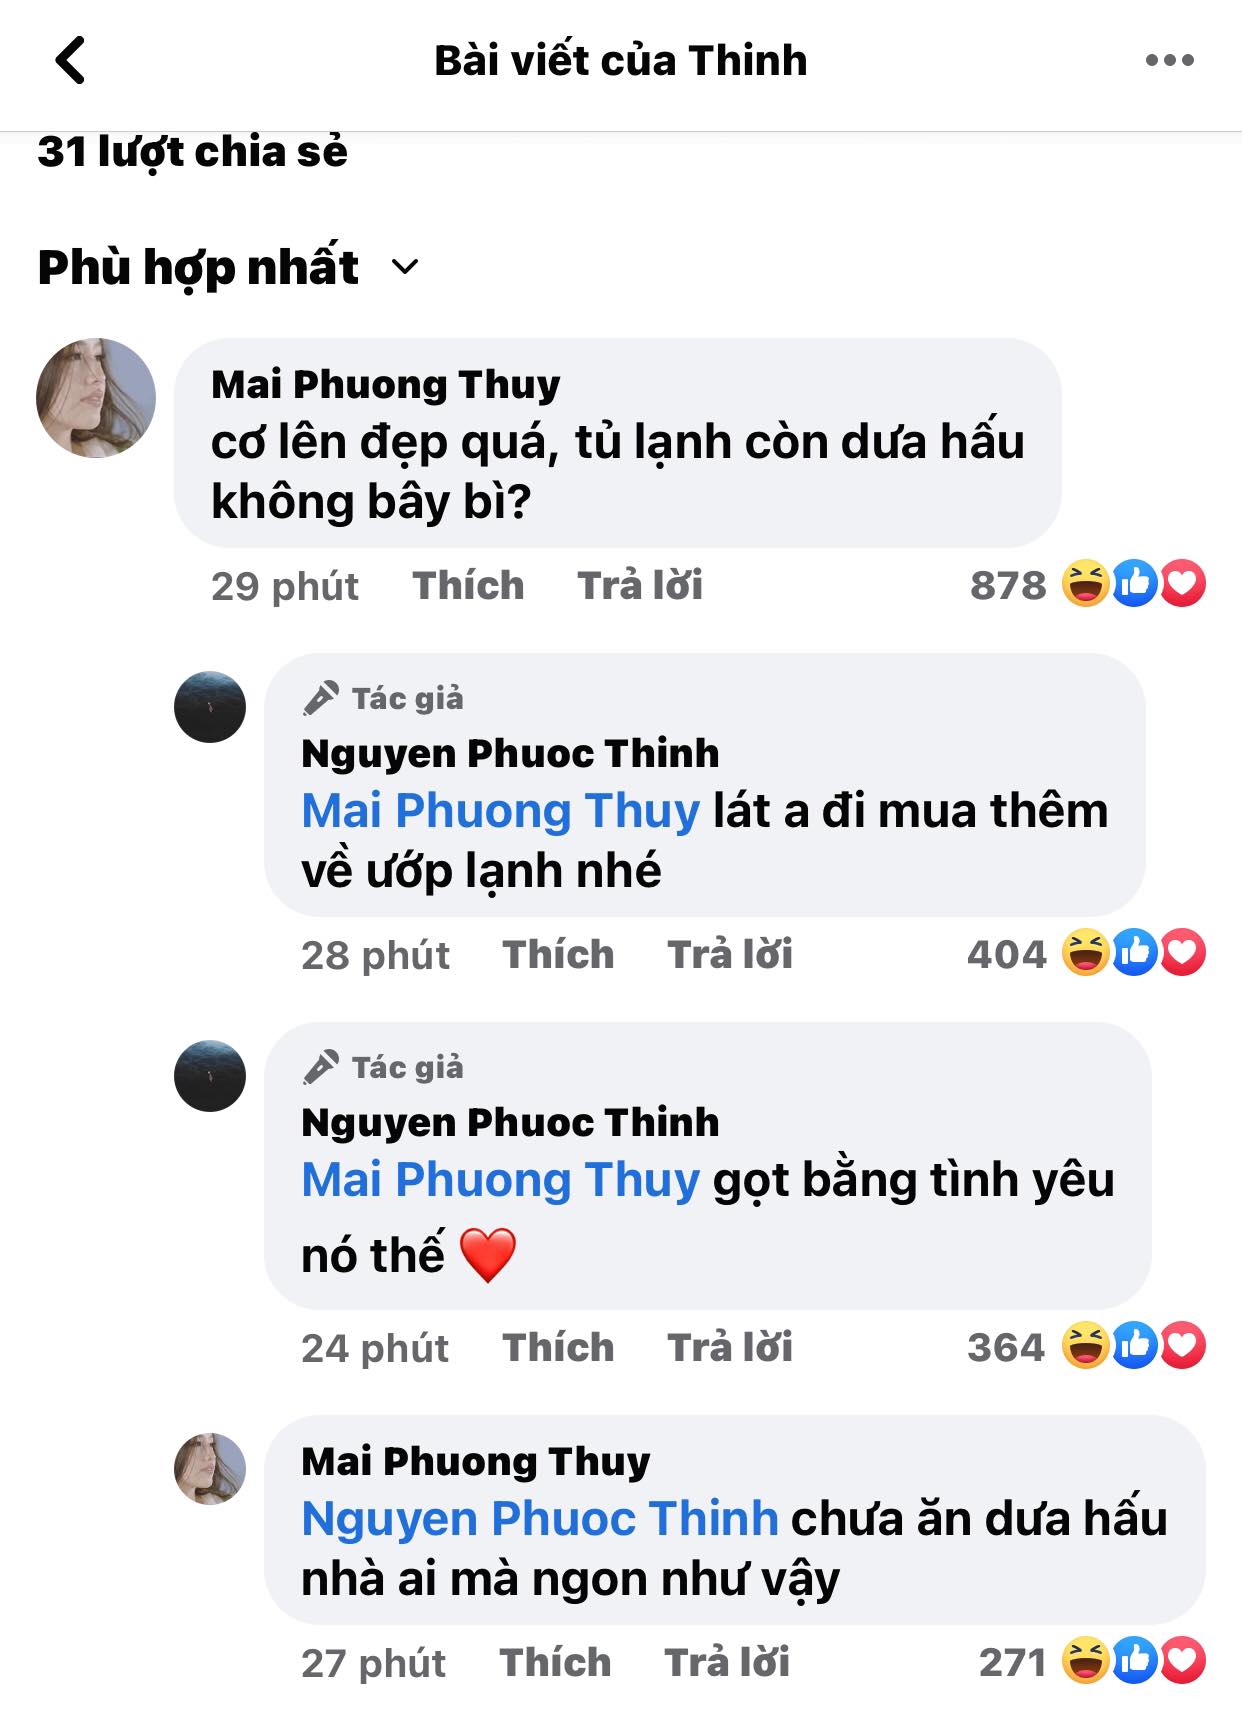 Mai-phuong-thuy-bat-ngo-cong-khai-tinh-cam-voi-noo-phuoc-thinh